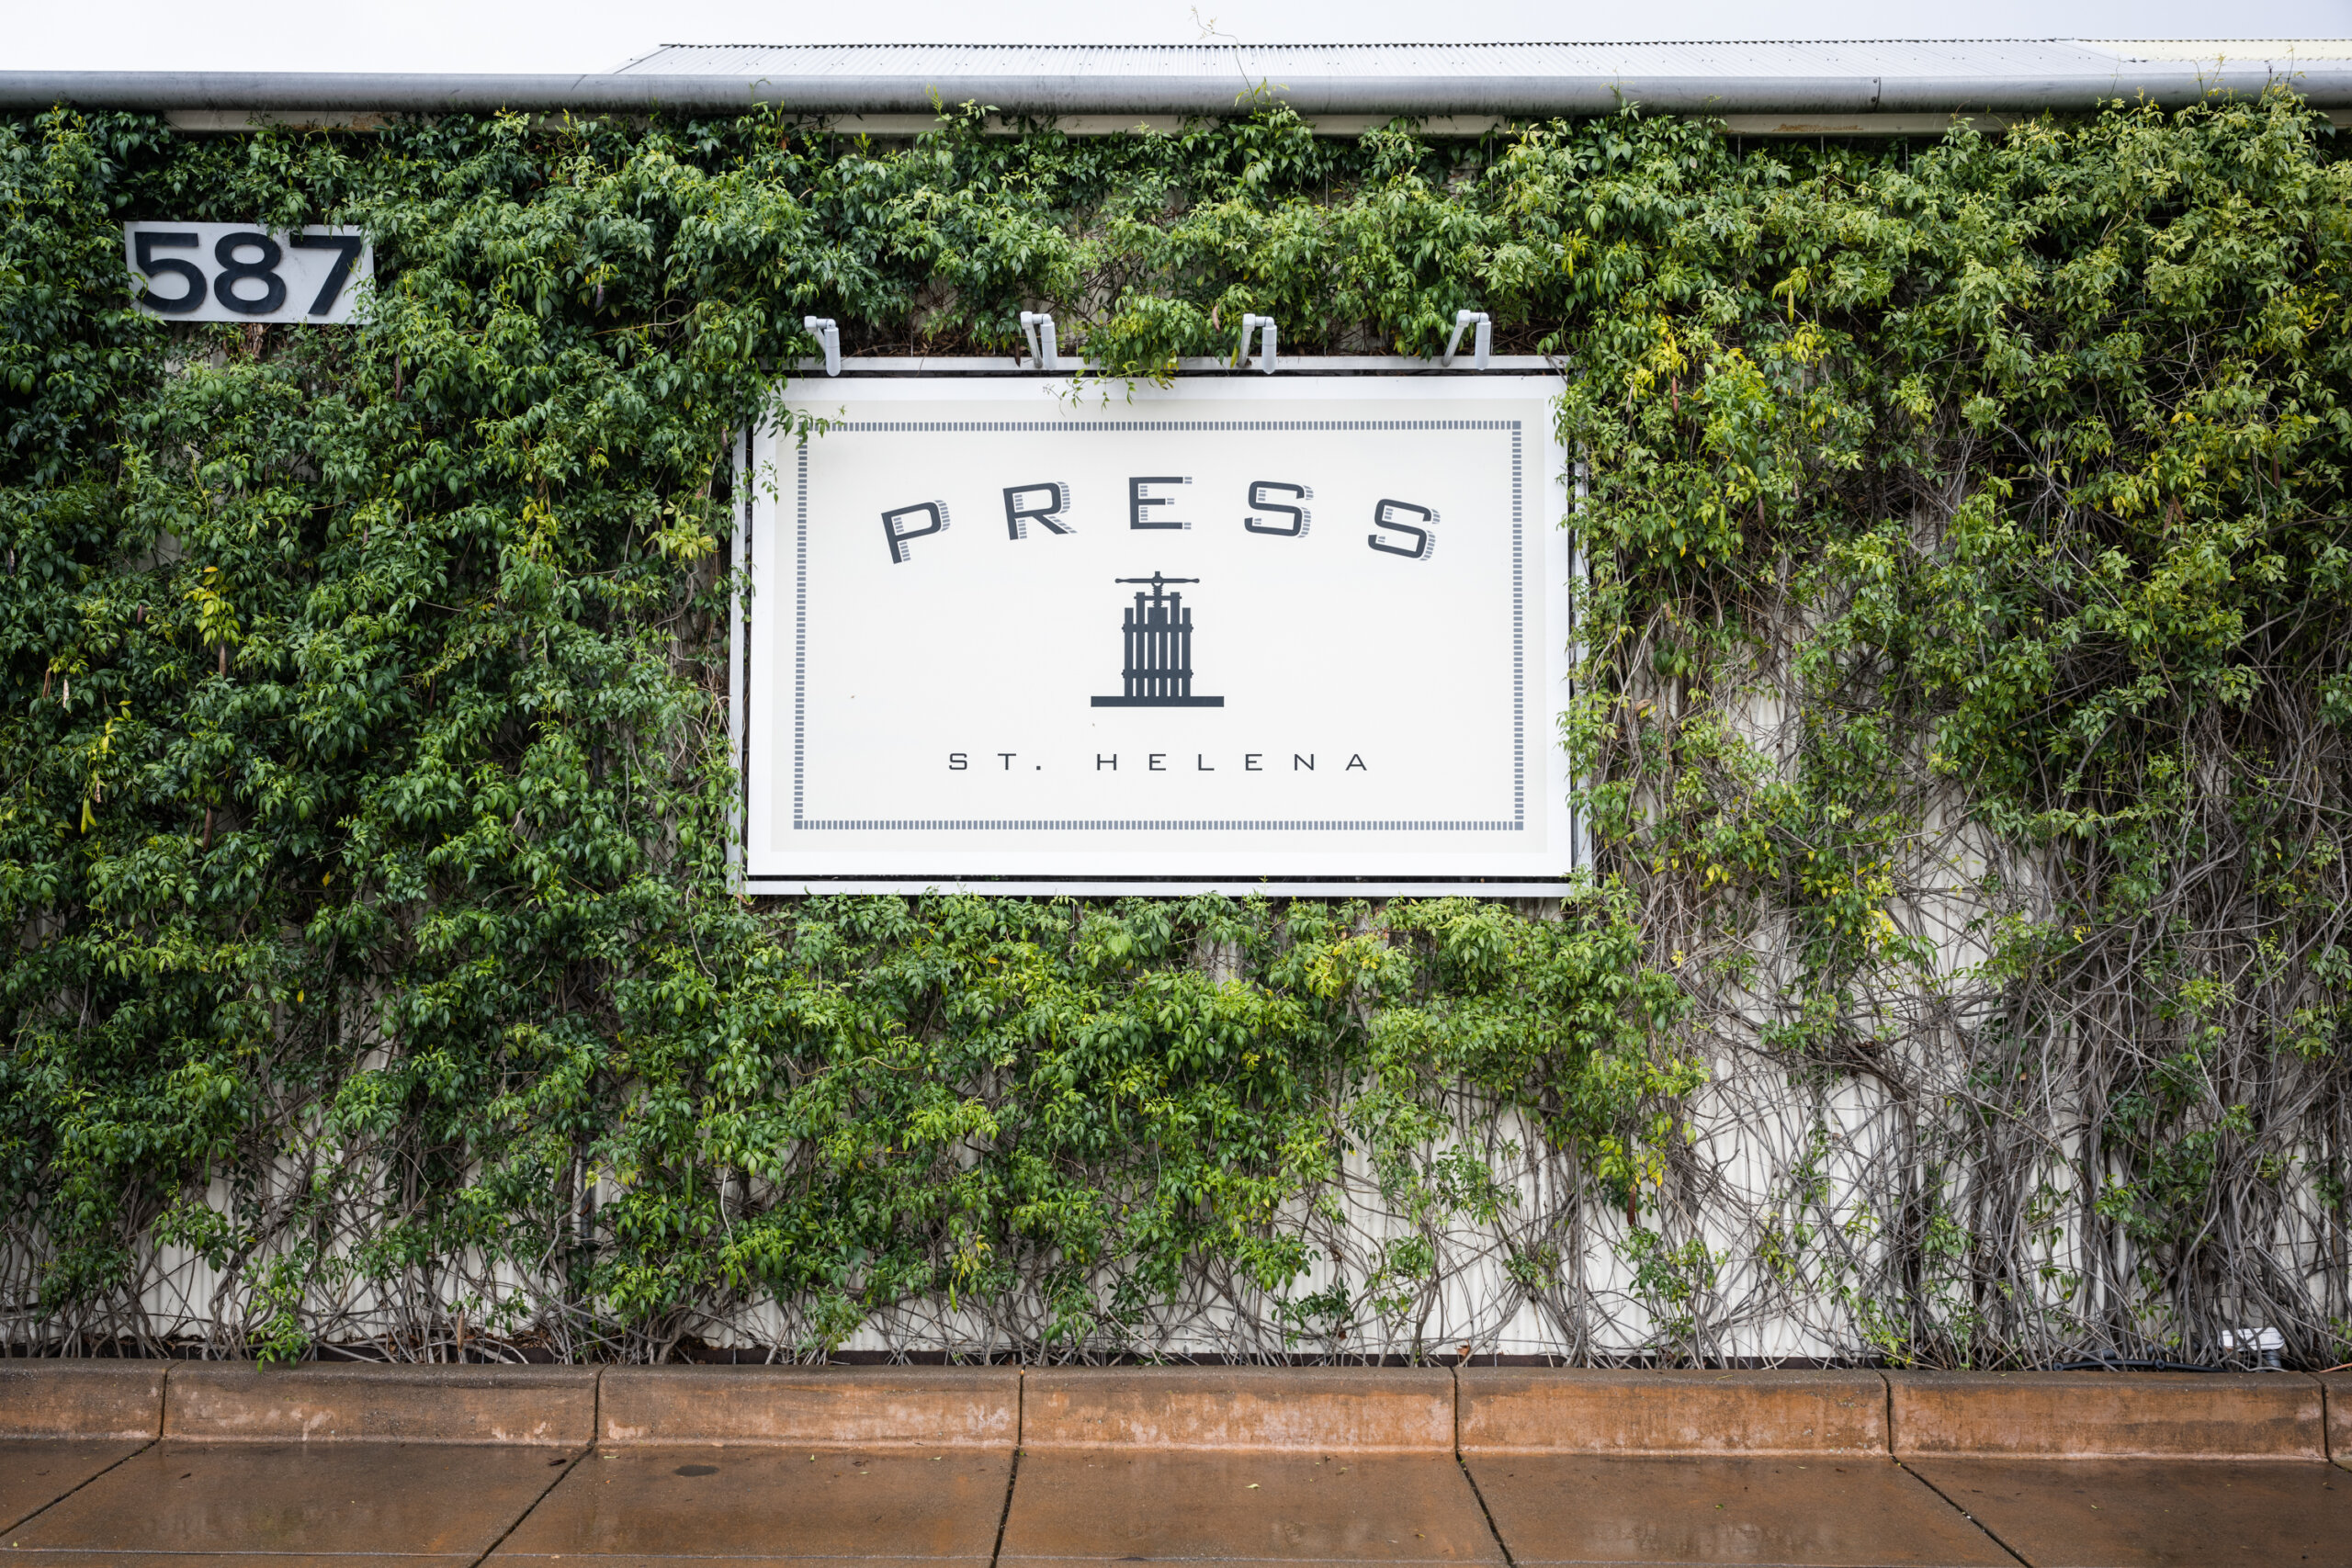 PRESS Restaurant signage